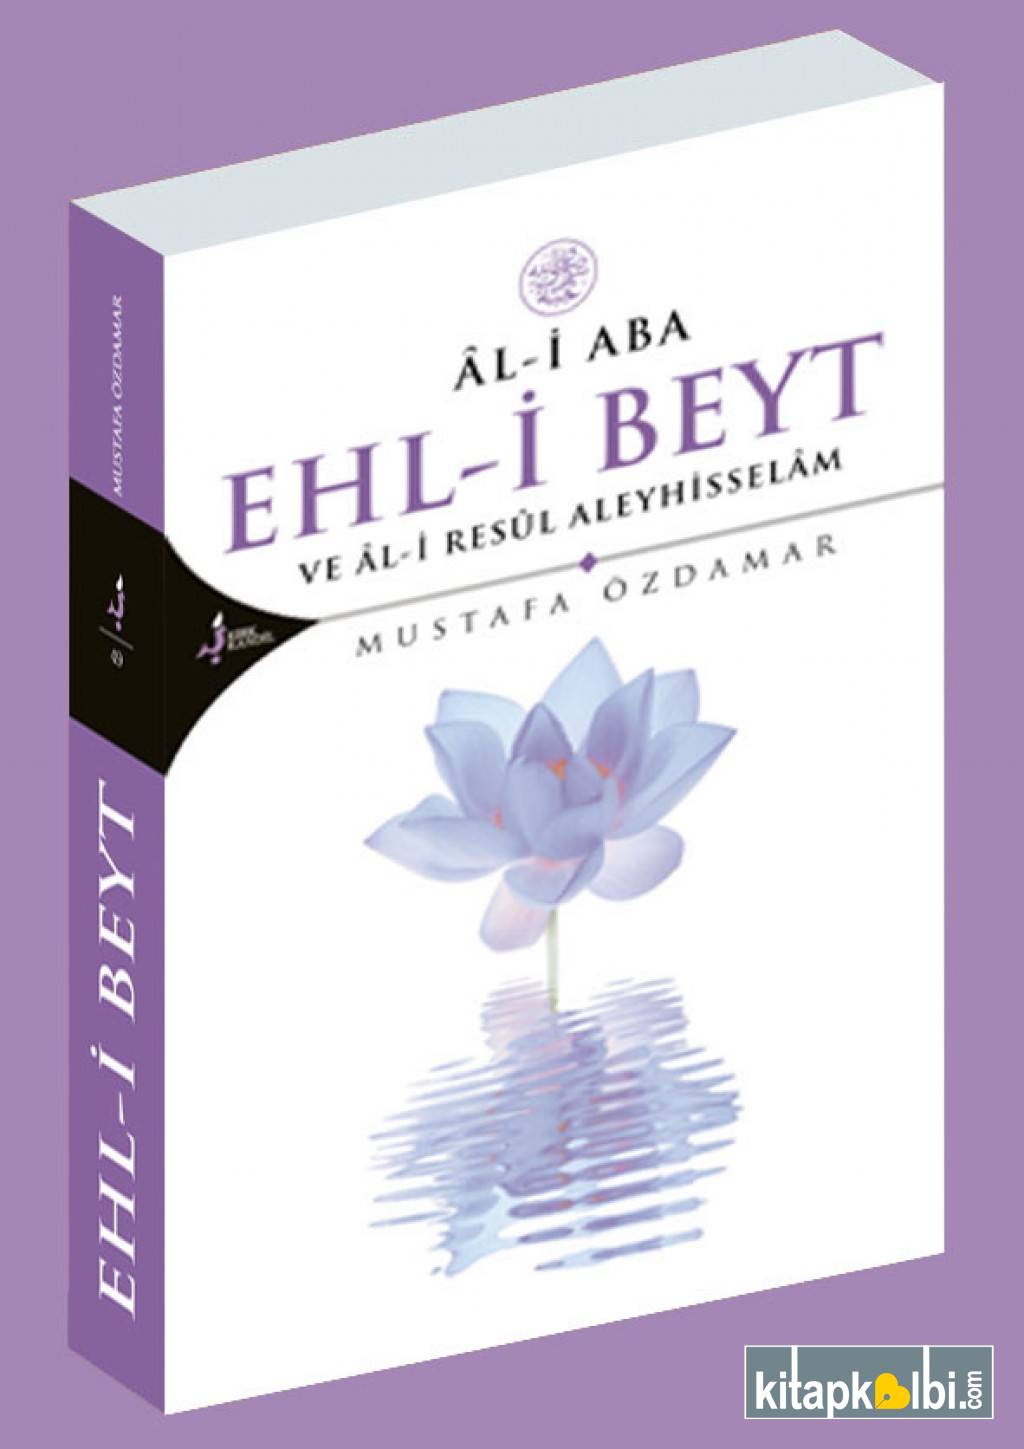 Al-i Aba Ehl-i Beyt  Ve Al-i Resul Aleyhisselam